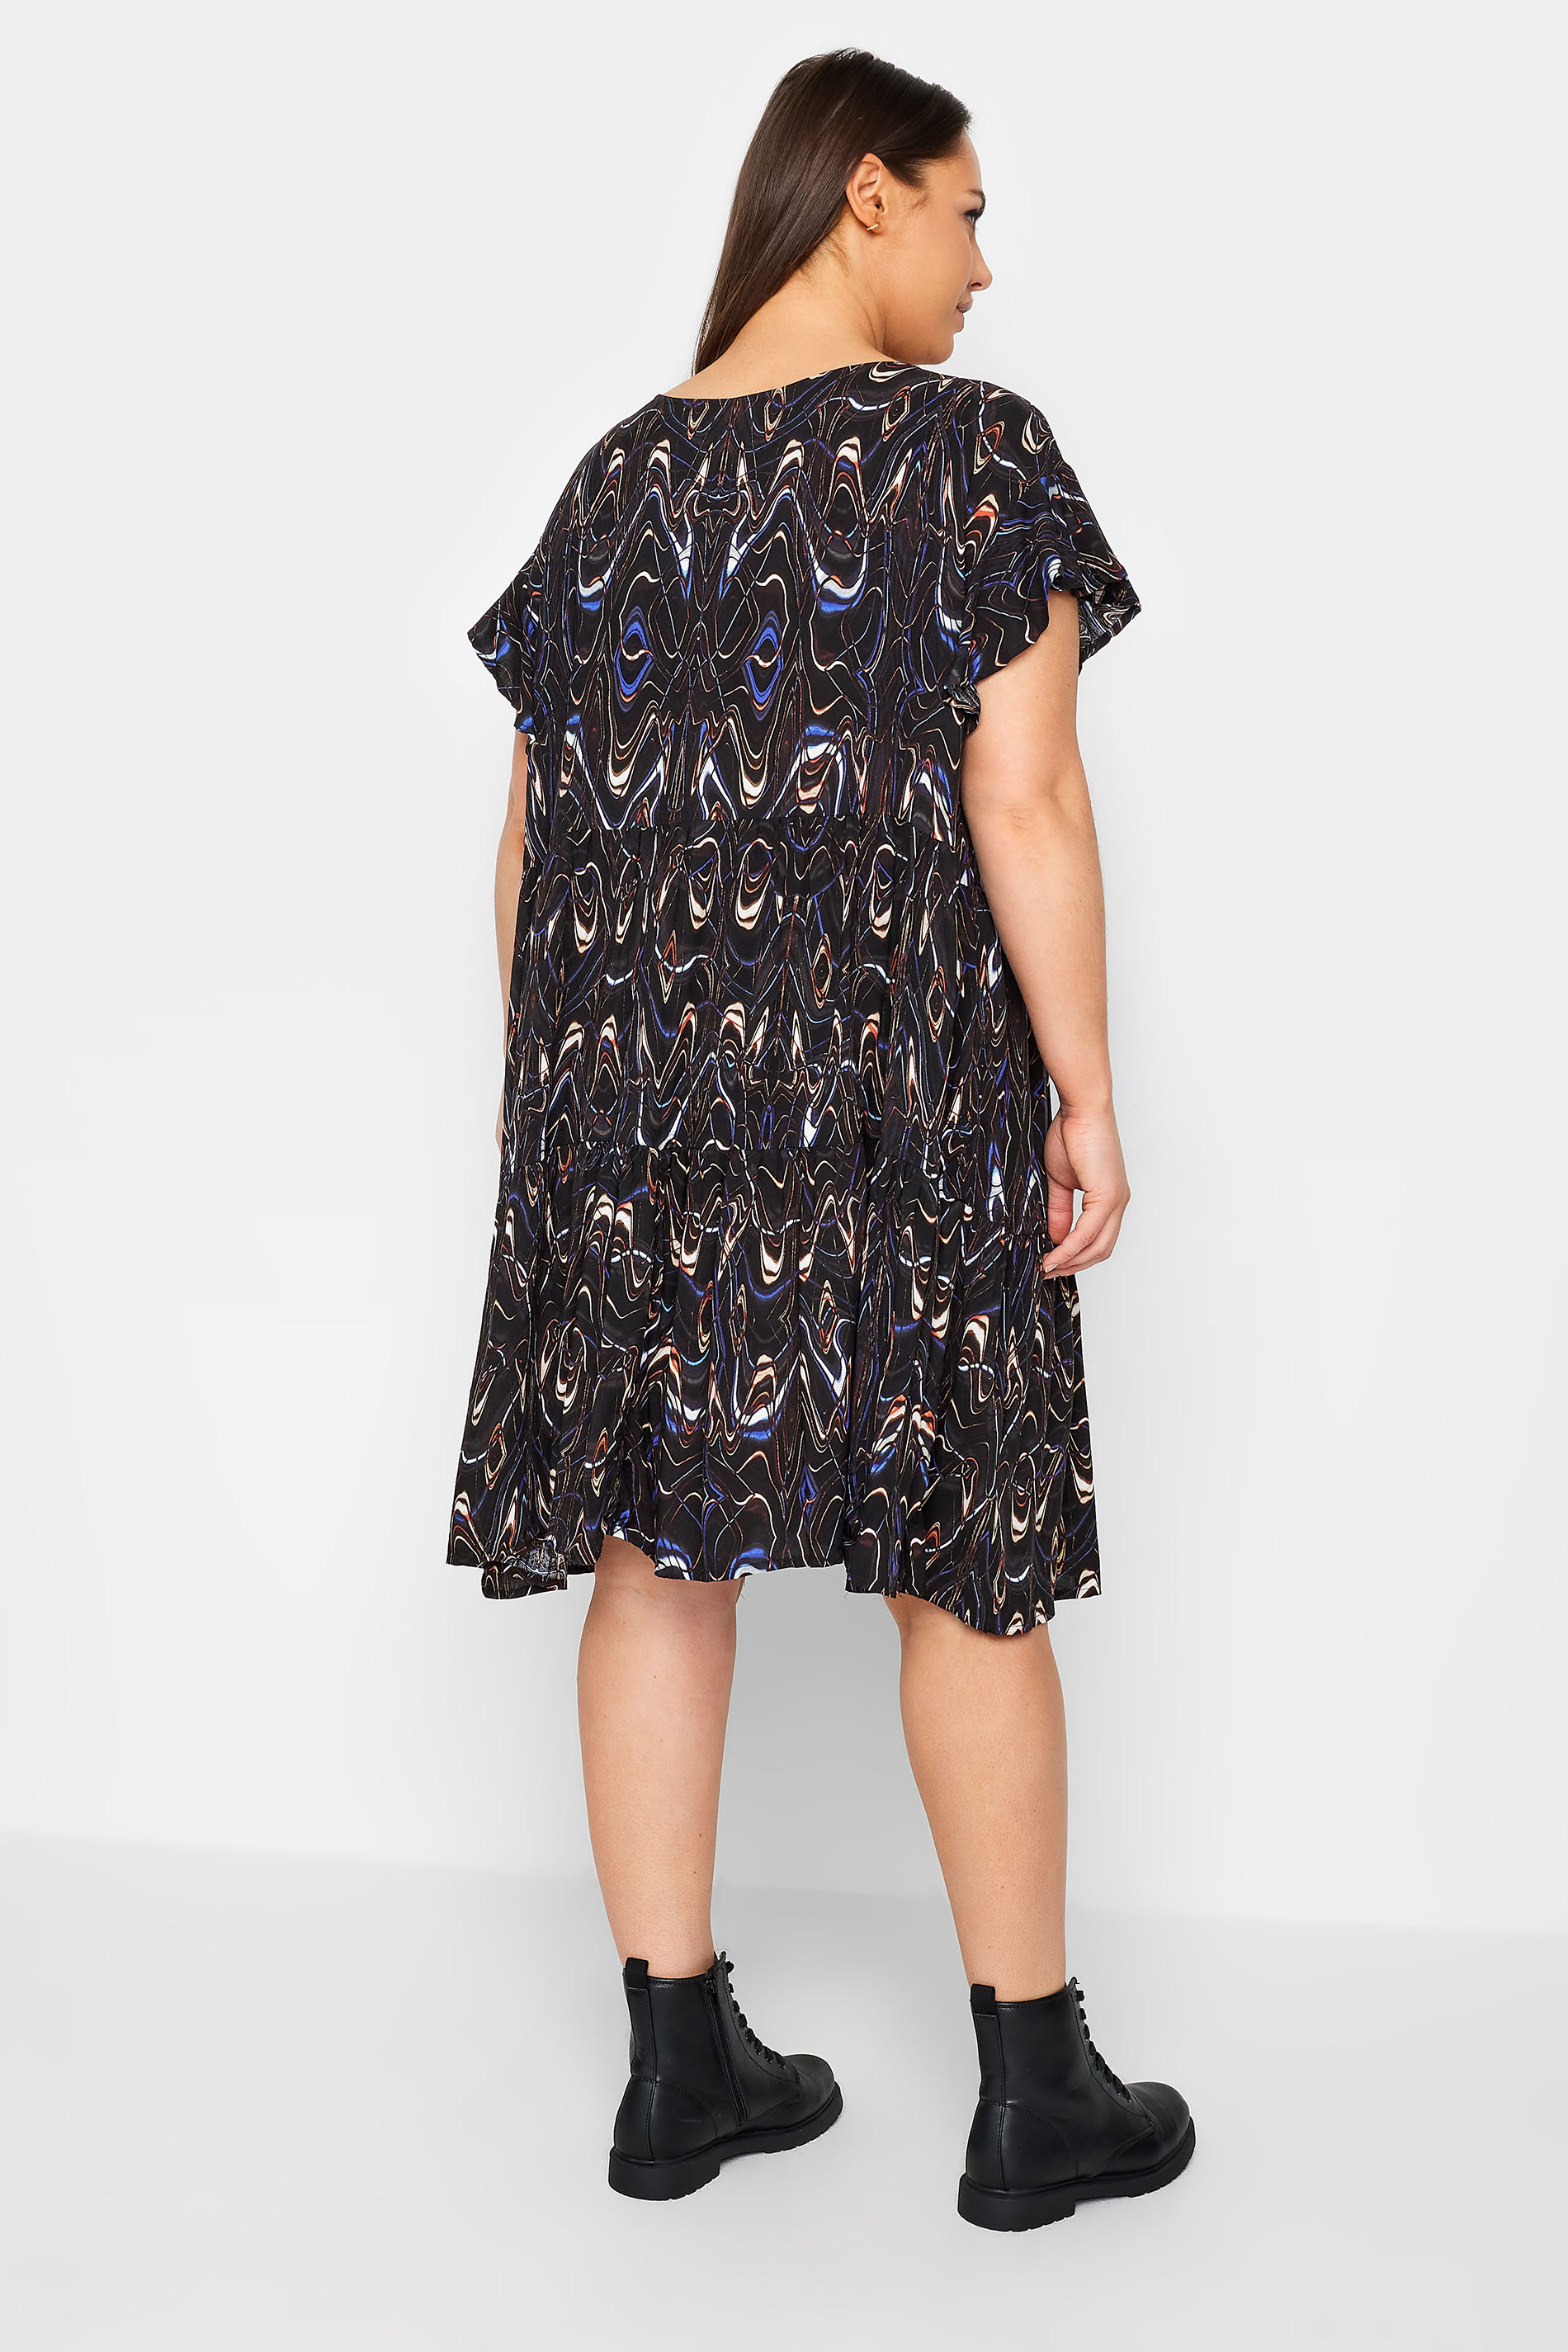 Evans Black Abstract Print Tunic Dress 3